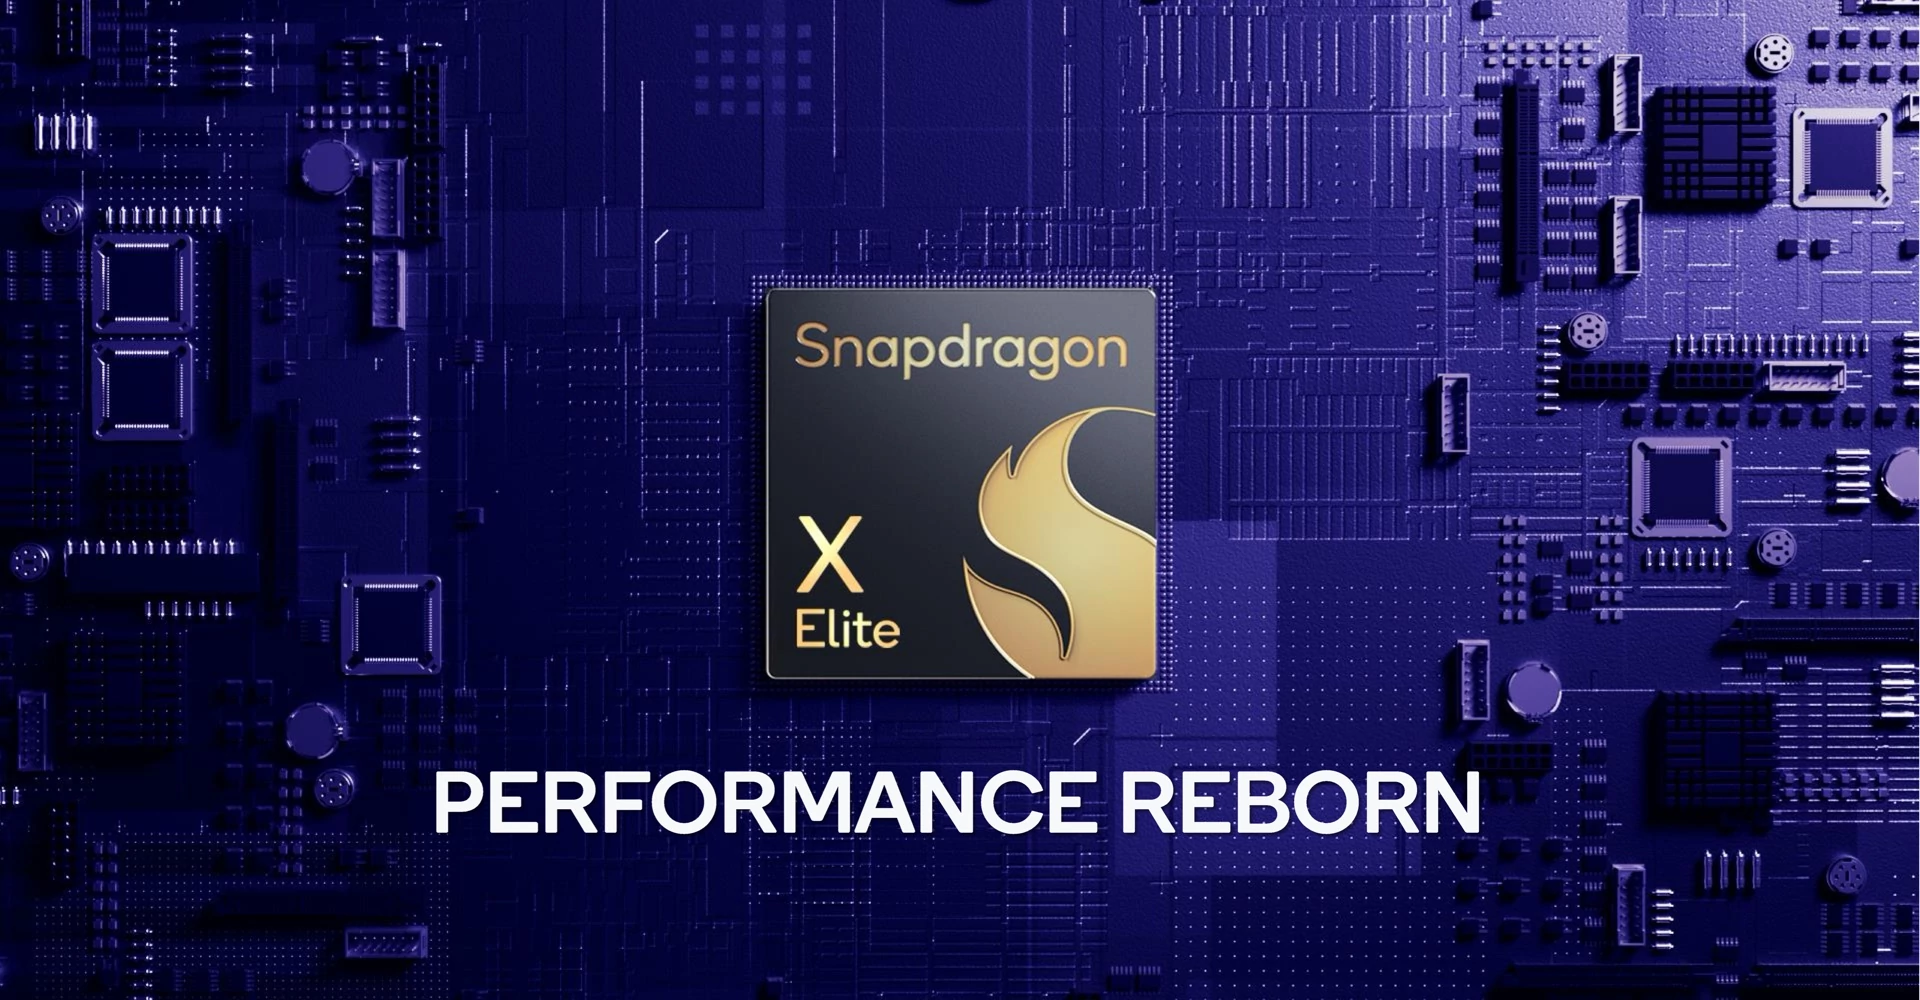 Snapdragon X Elite Logo